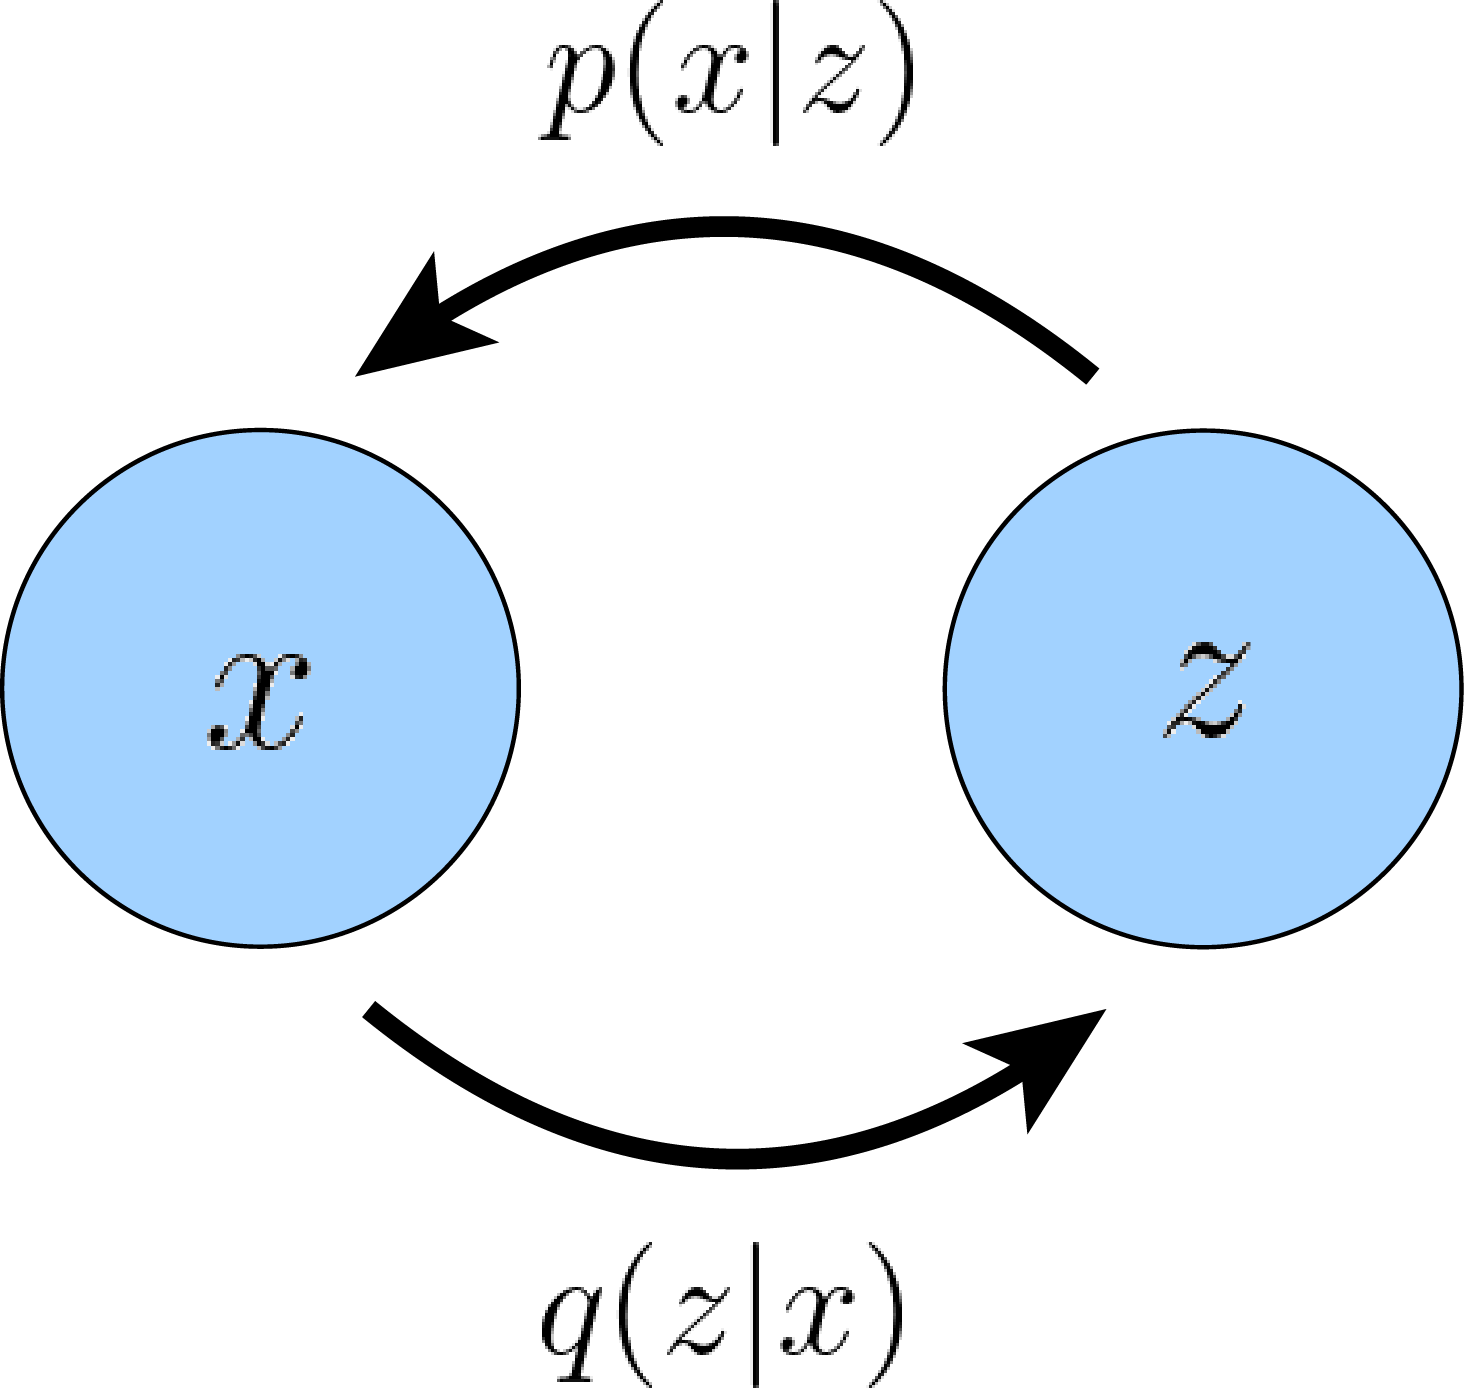 A Variational Autoencoder graphically represented. Here, encoder 